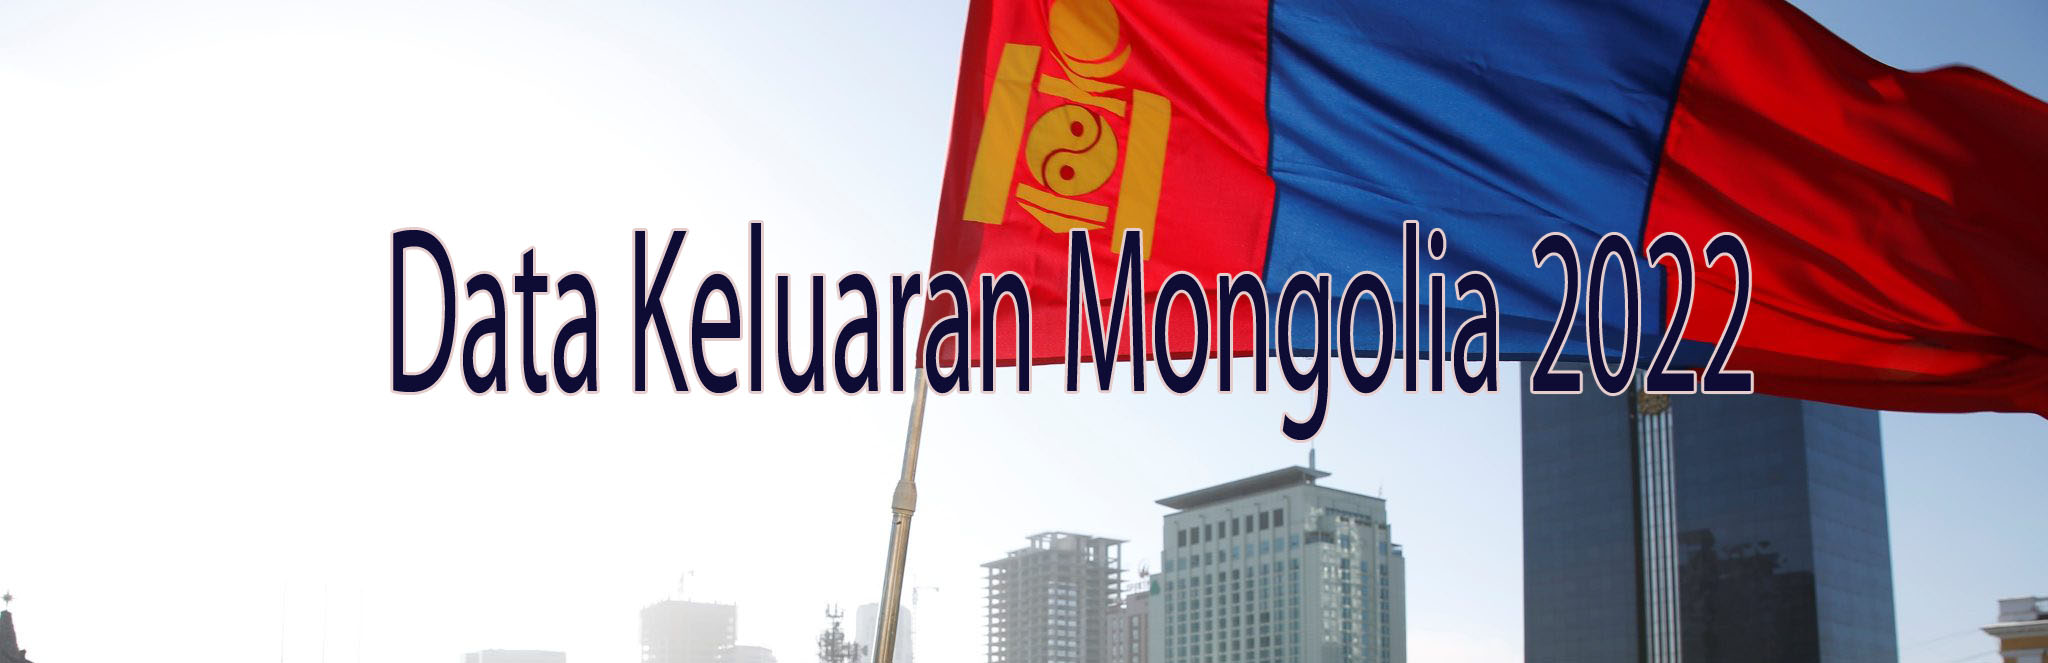 Data Keluaran Mongolia 2023